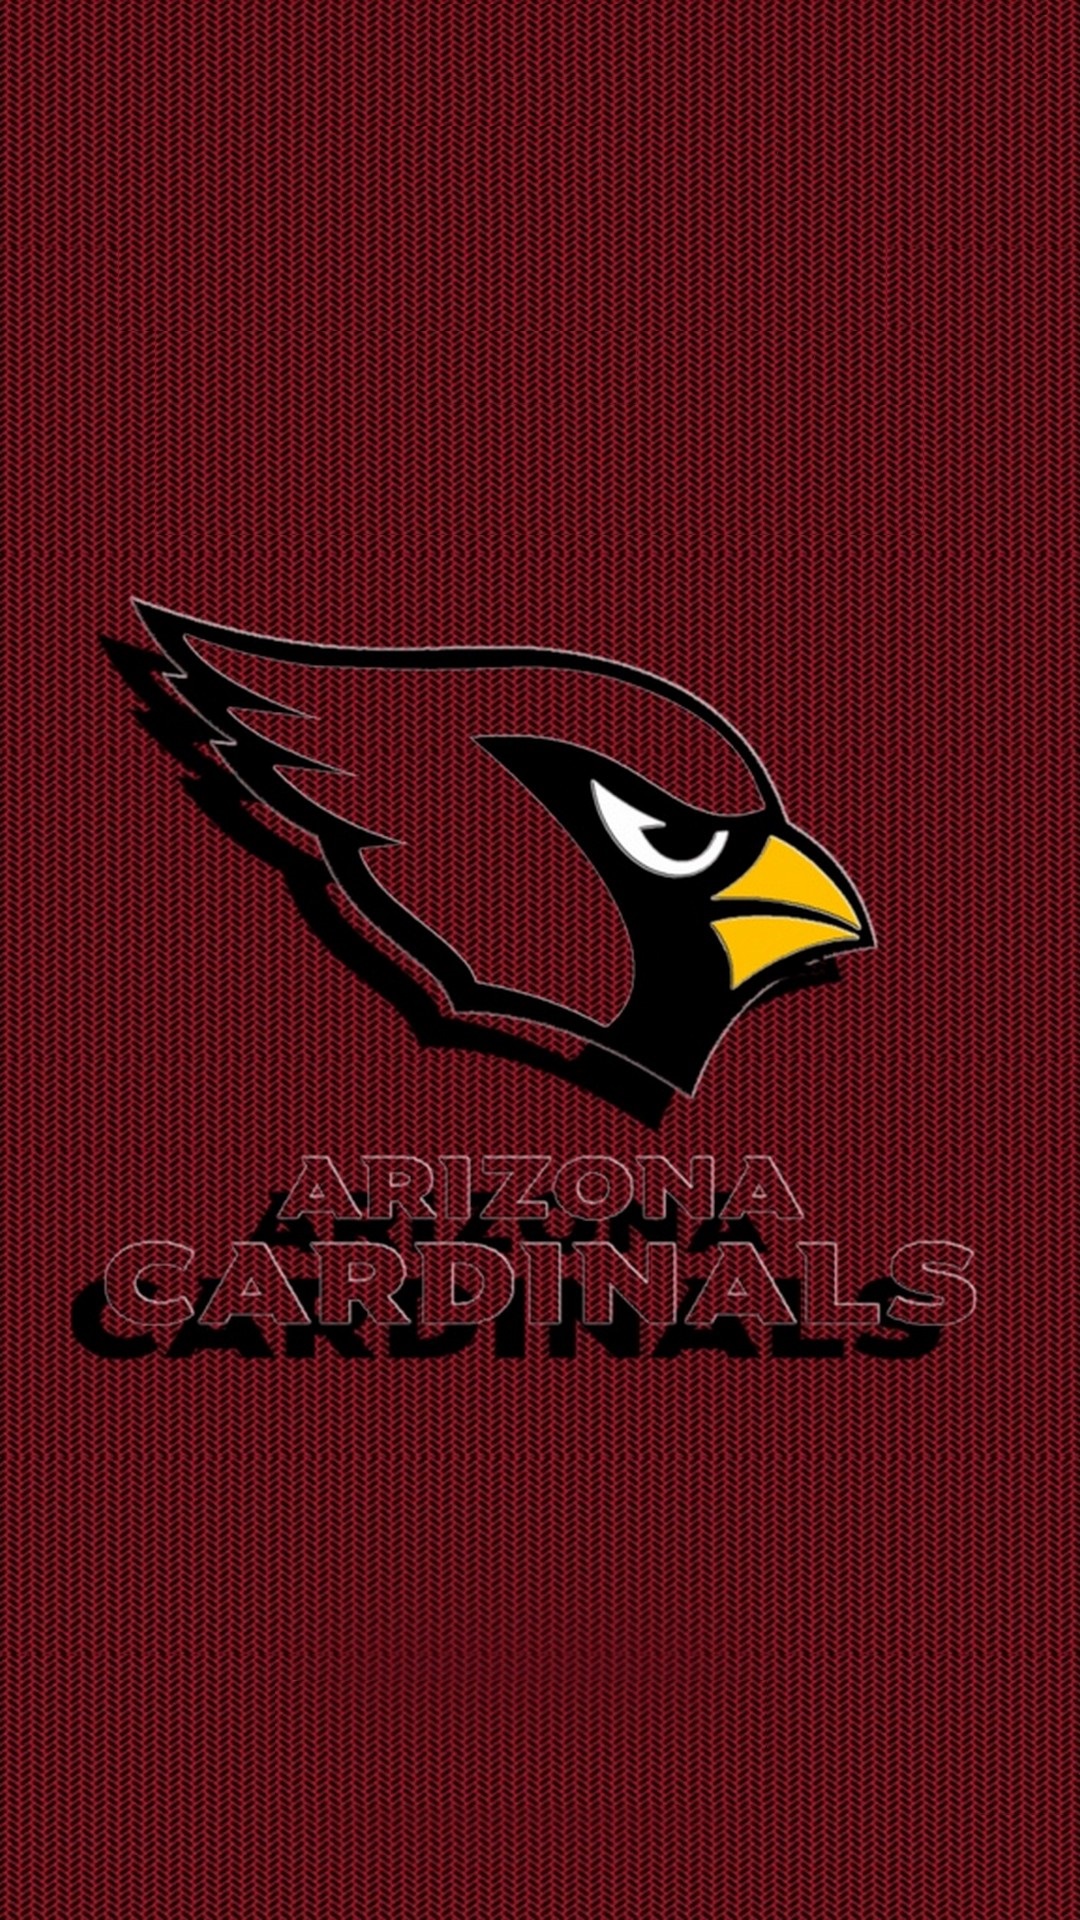 Arizona Cardinals Wallpaper Online